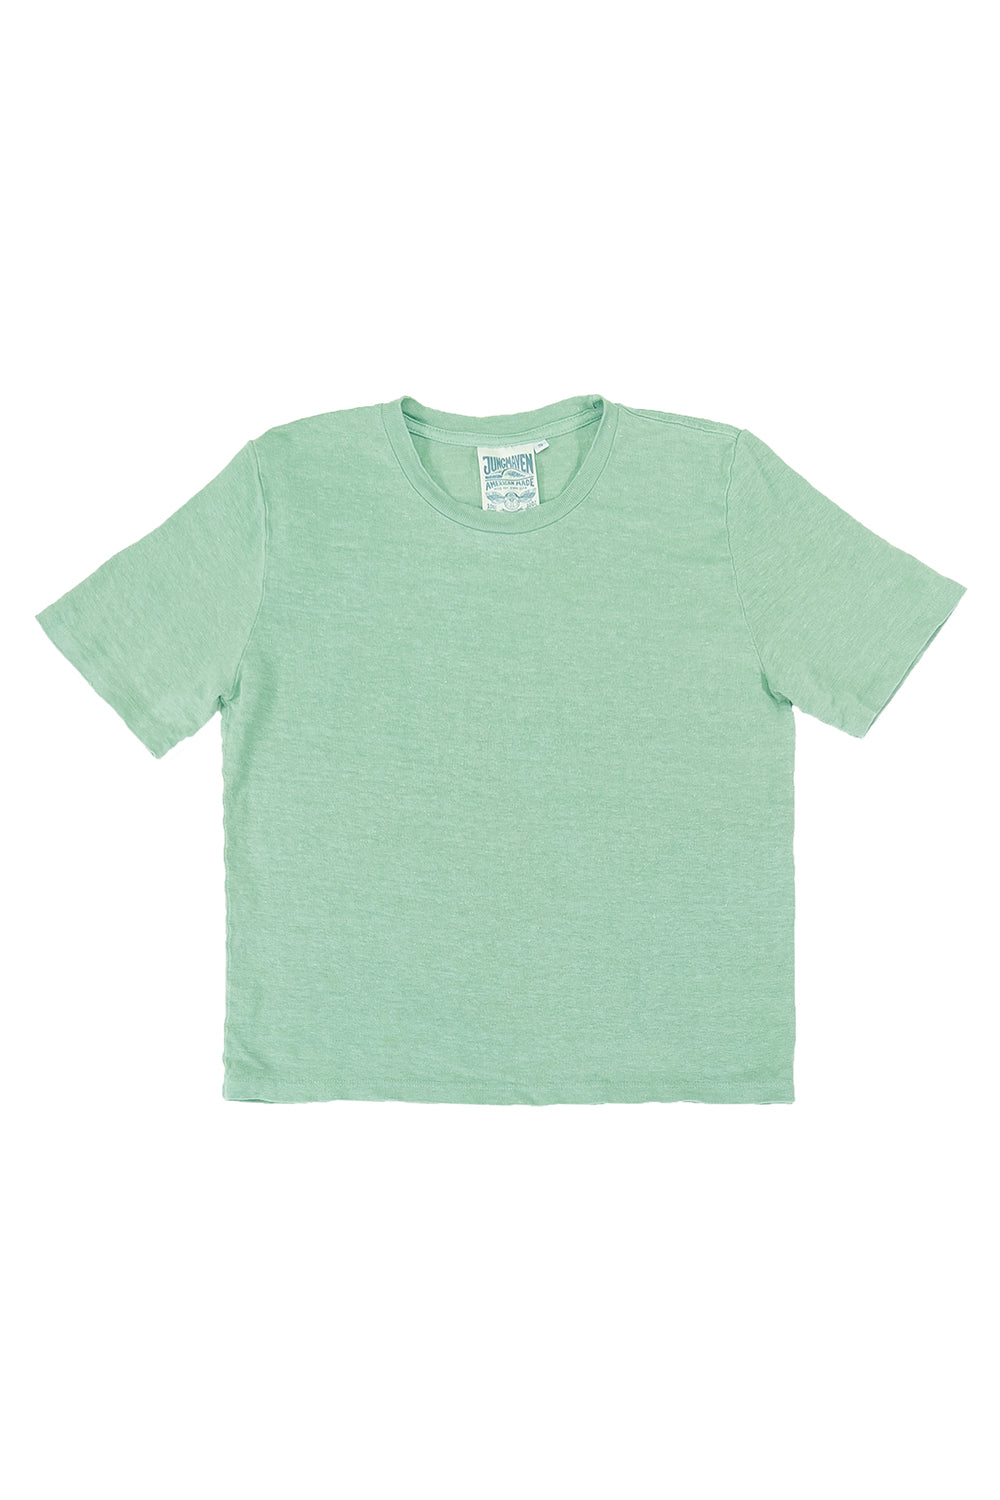 Dakota - 100% Hemp Cropped Tee | Jungmaven Hemp Clothing & Accessories / Color: Sage Green